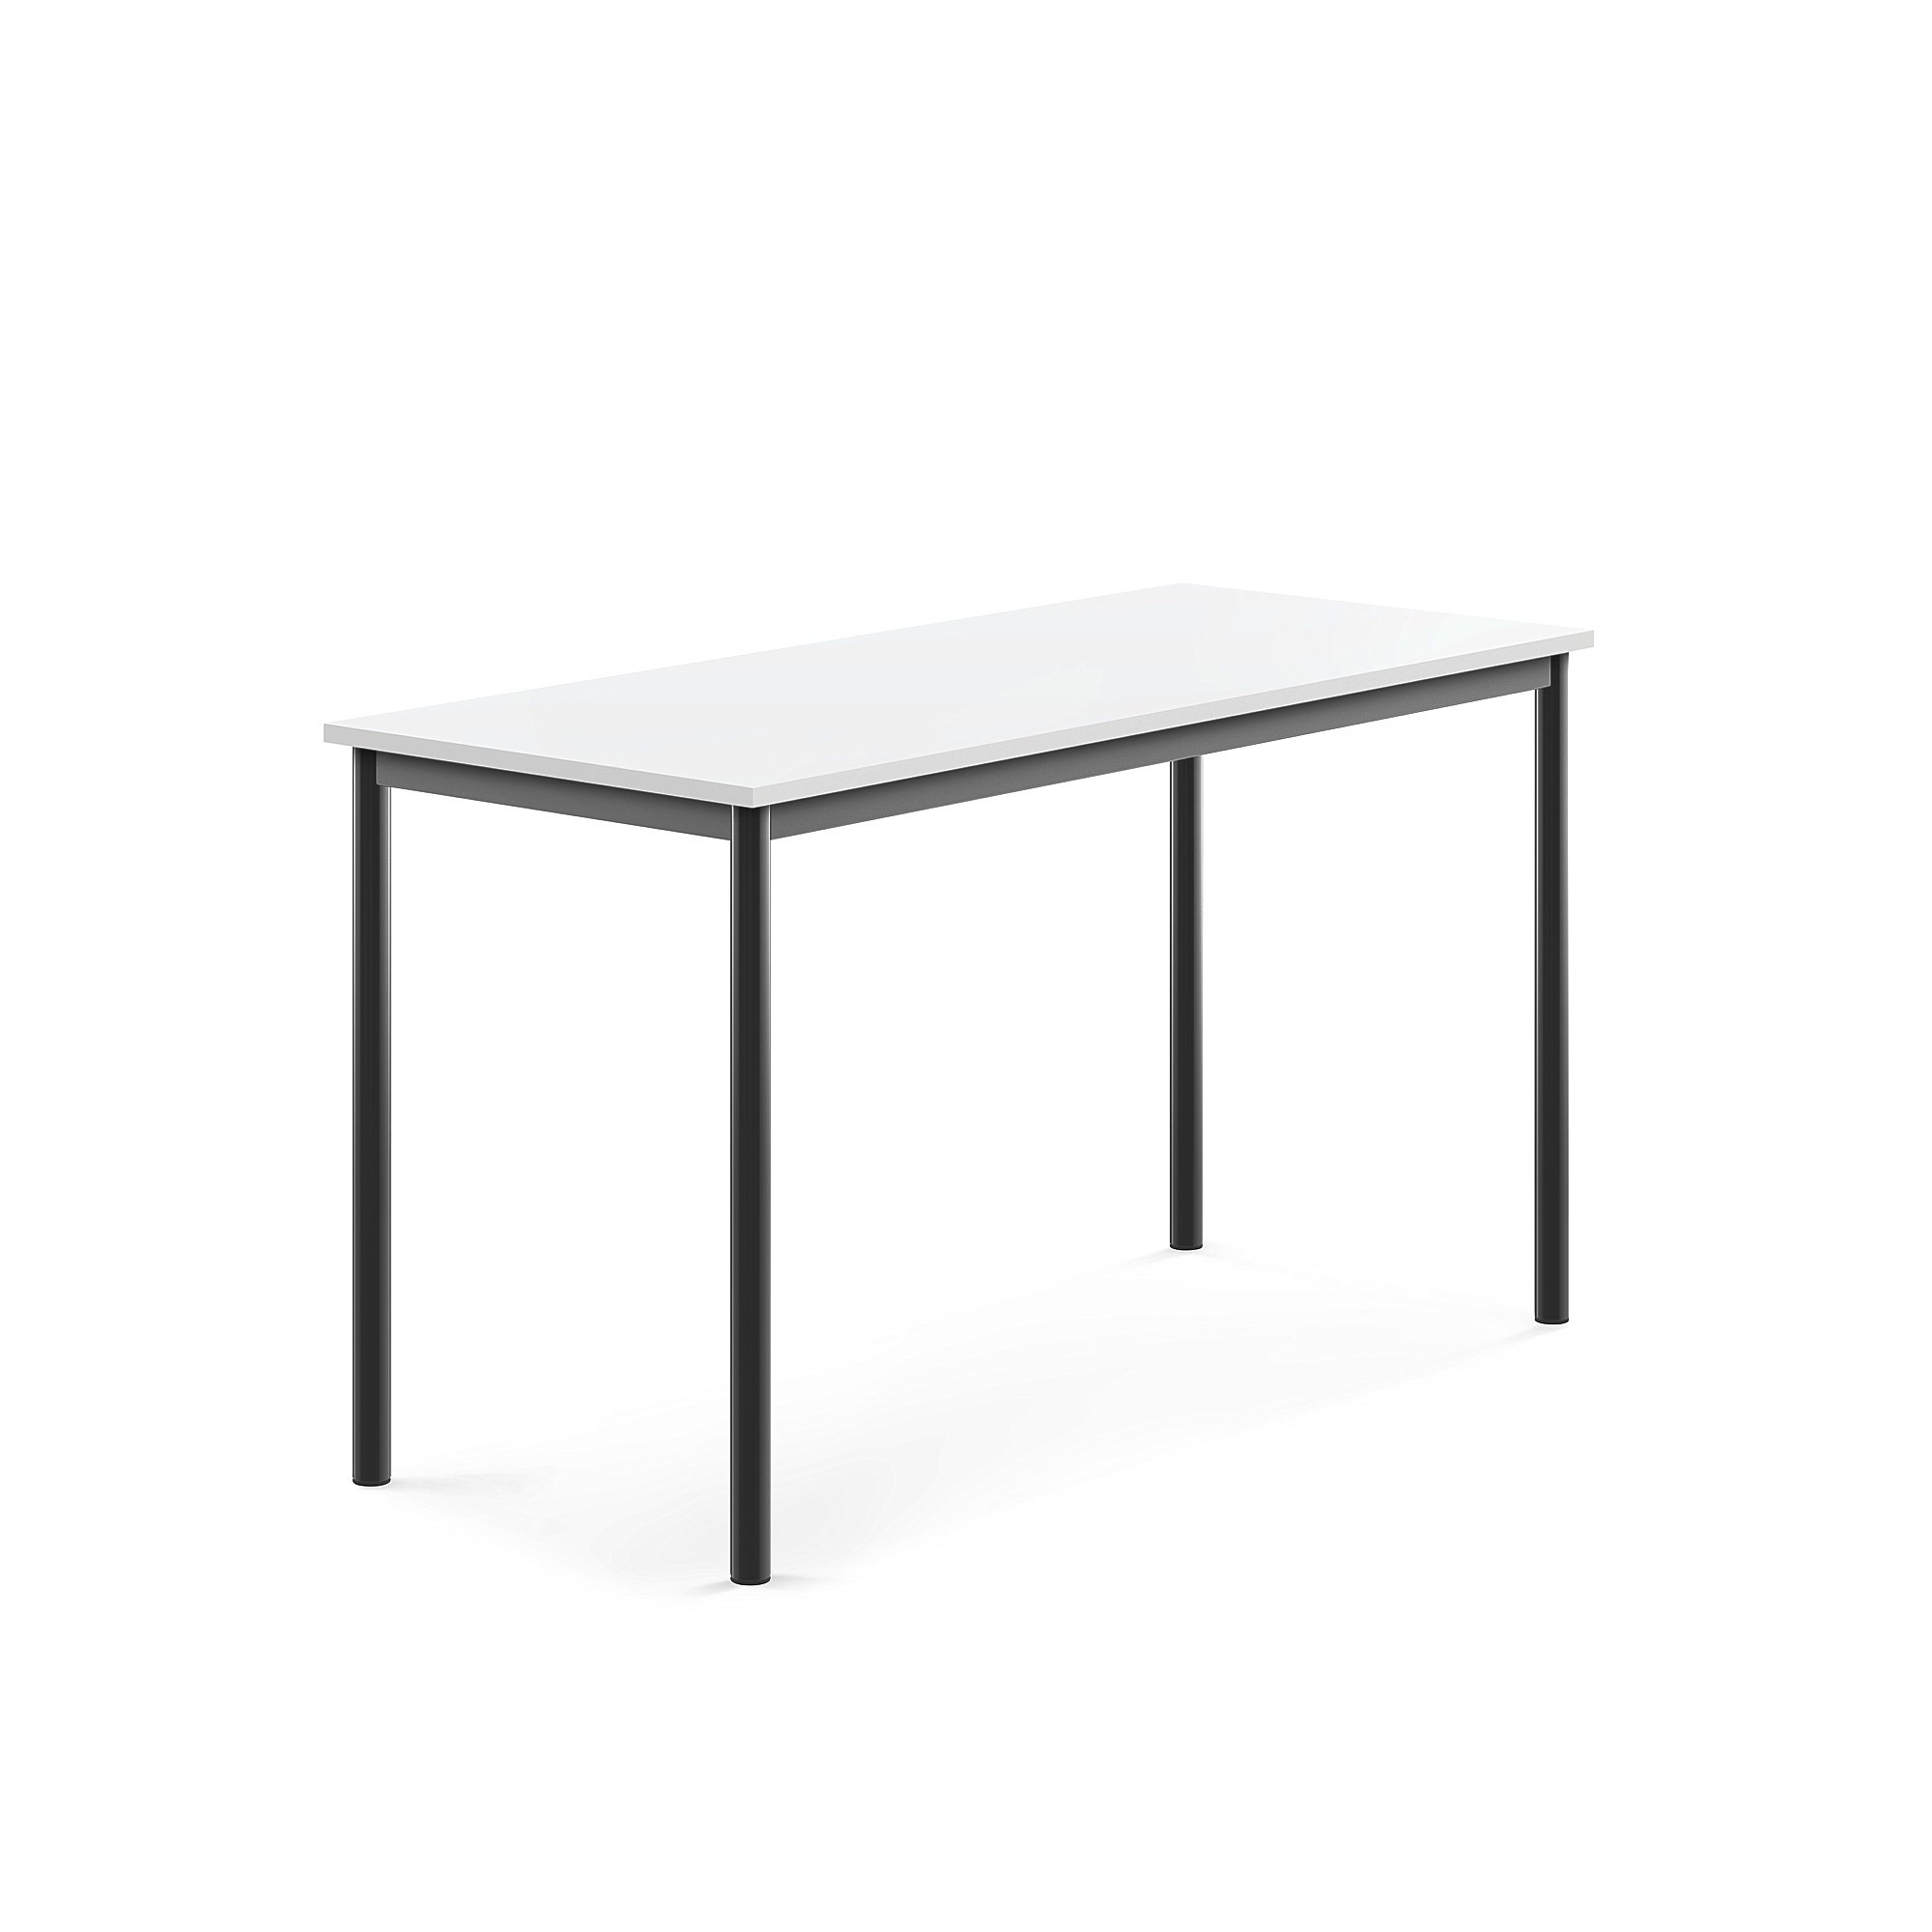 Stůl BORÅS, 1400x600x760 mm, antracitově šedé nohy, HPL deska, bílá